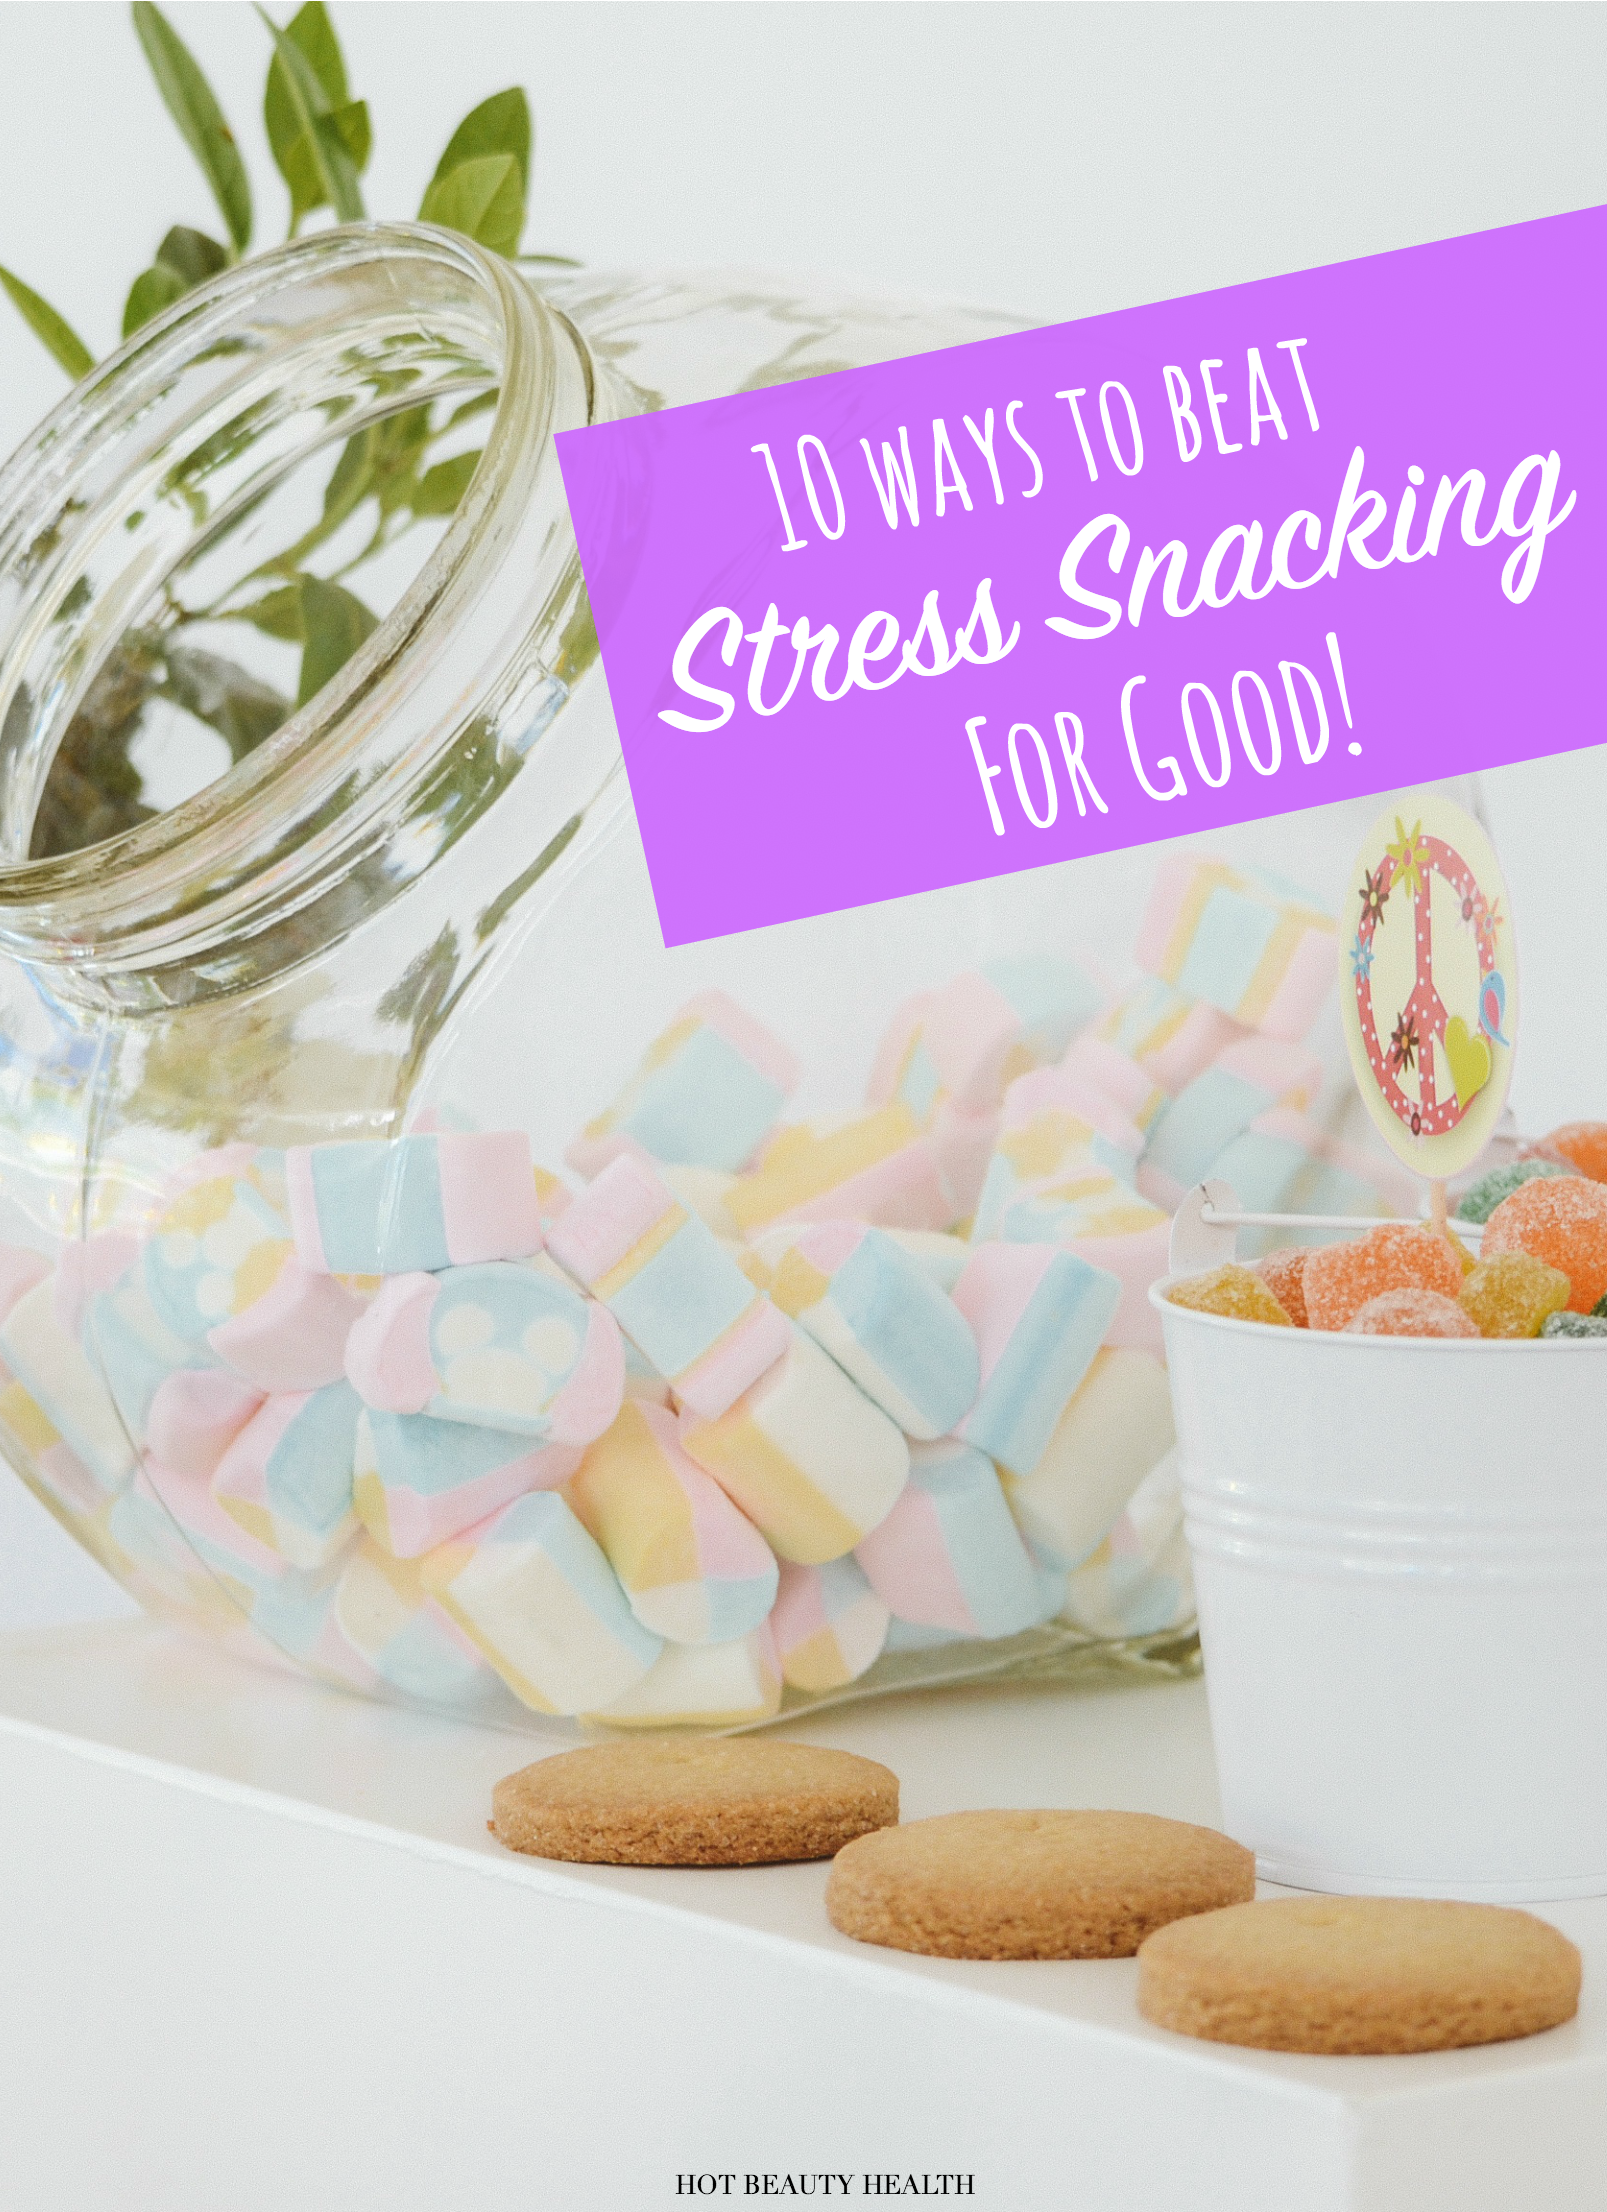 beat stress snacking